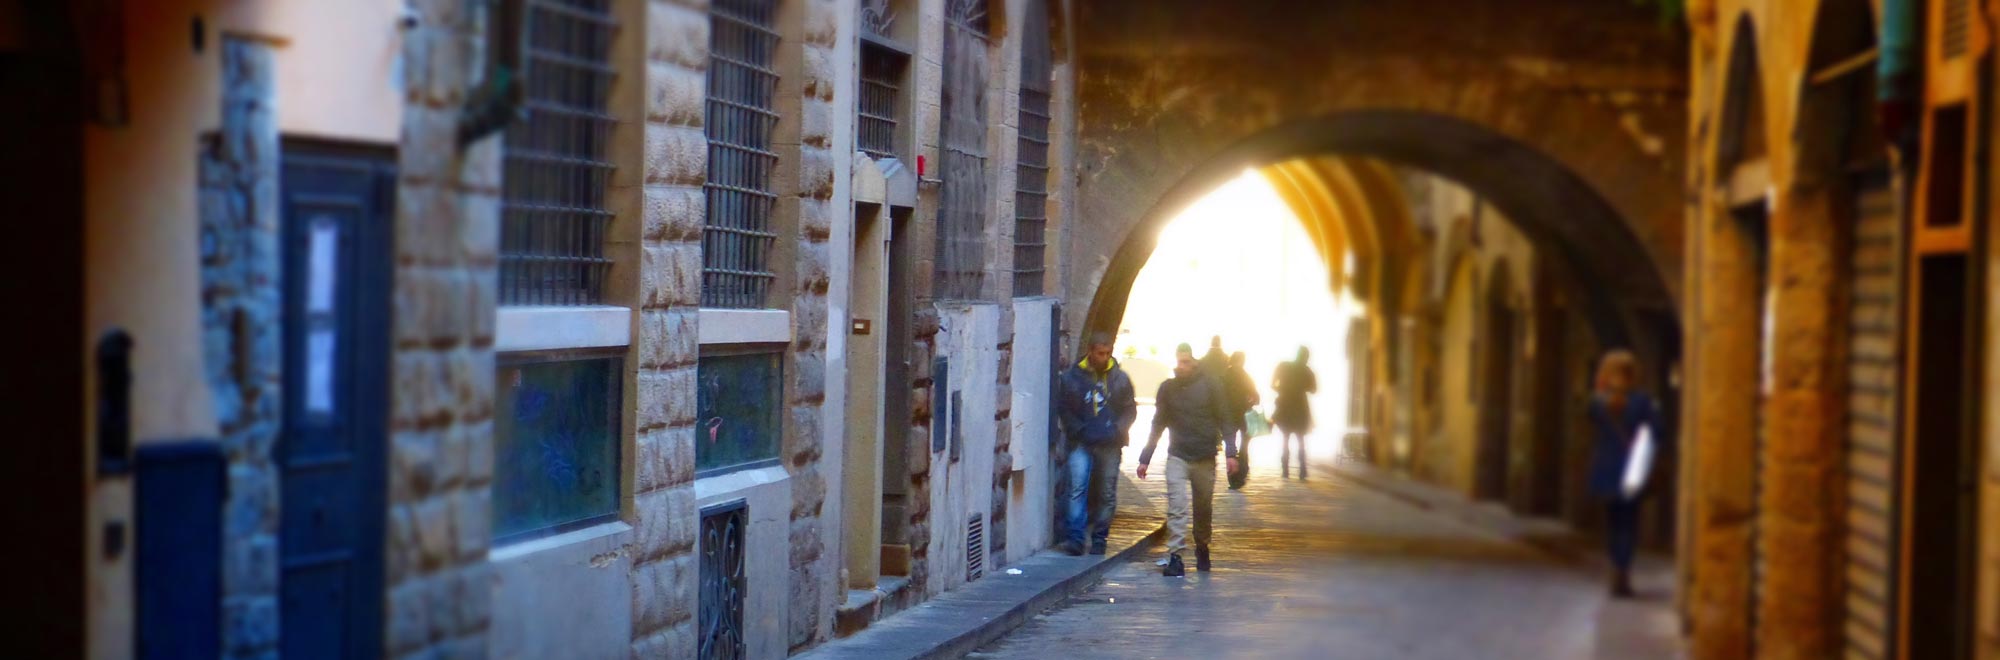 Visite guidate a Firenze con una guida turistica ufficiale. Visita guidata a Uffizi, Duomo, Ponte Vecchio, i Medici